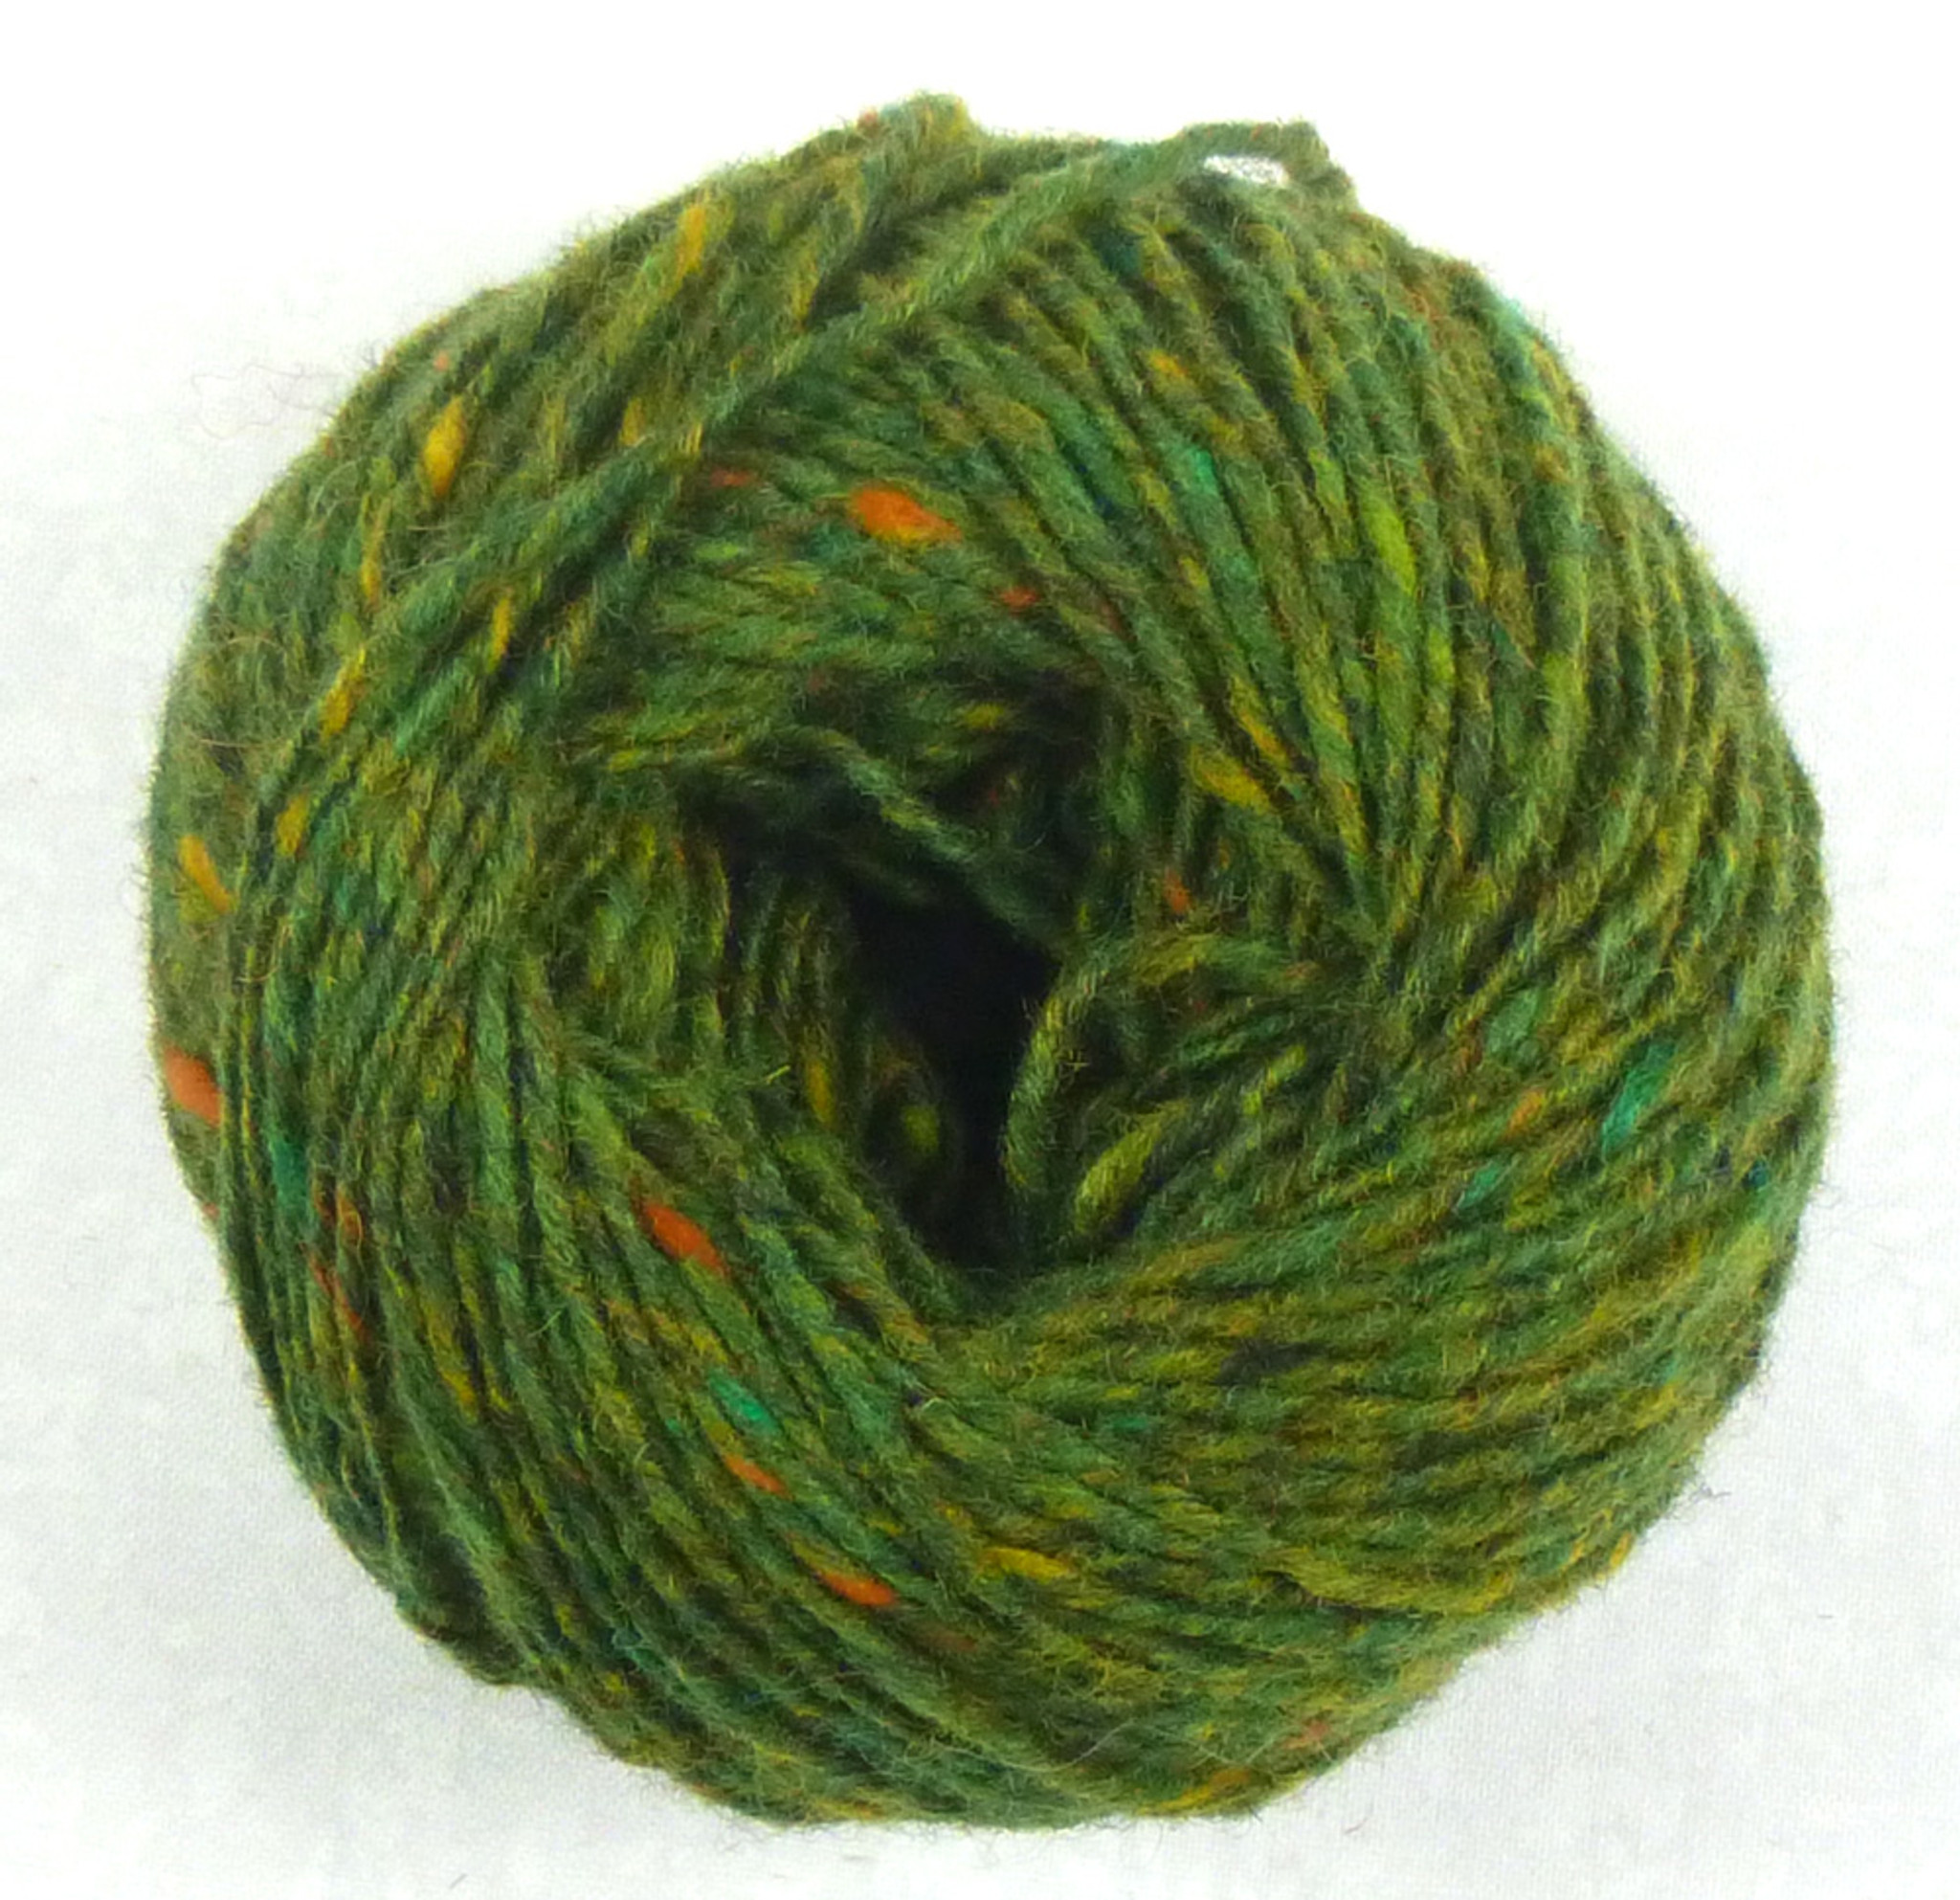 Rowan Fine Tweed Colour Chart